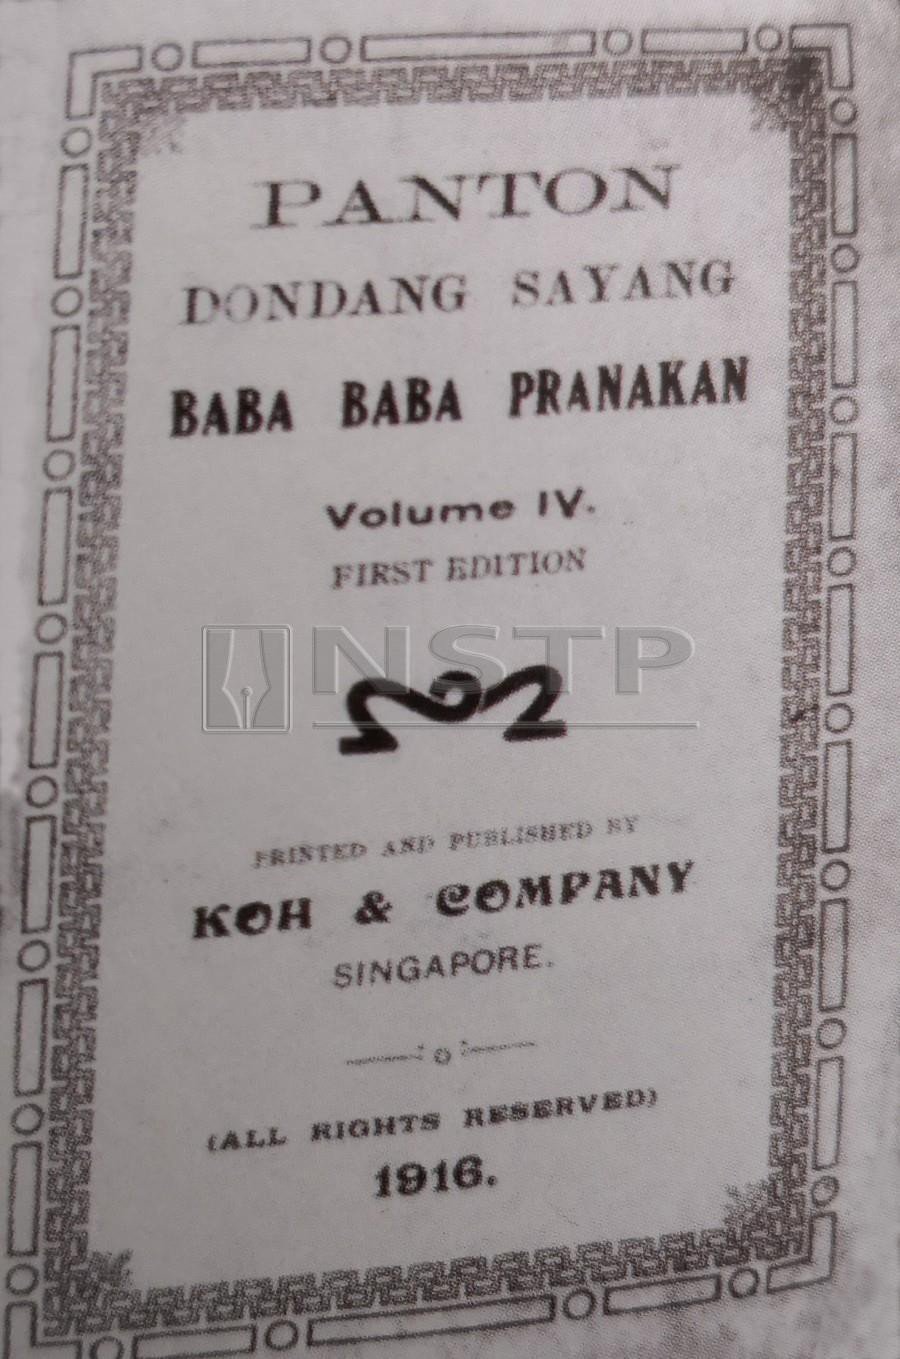 A Dondang Sayang pantun book published in 1916.